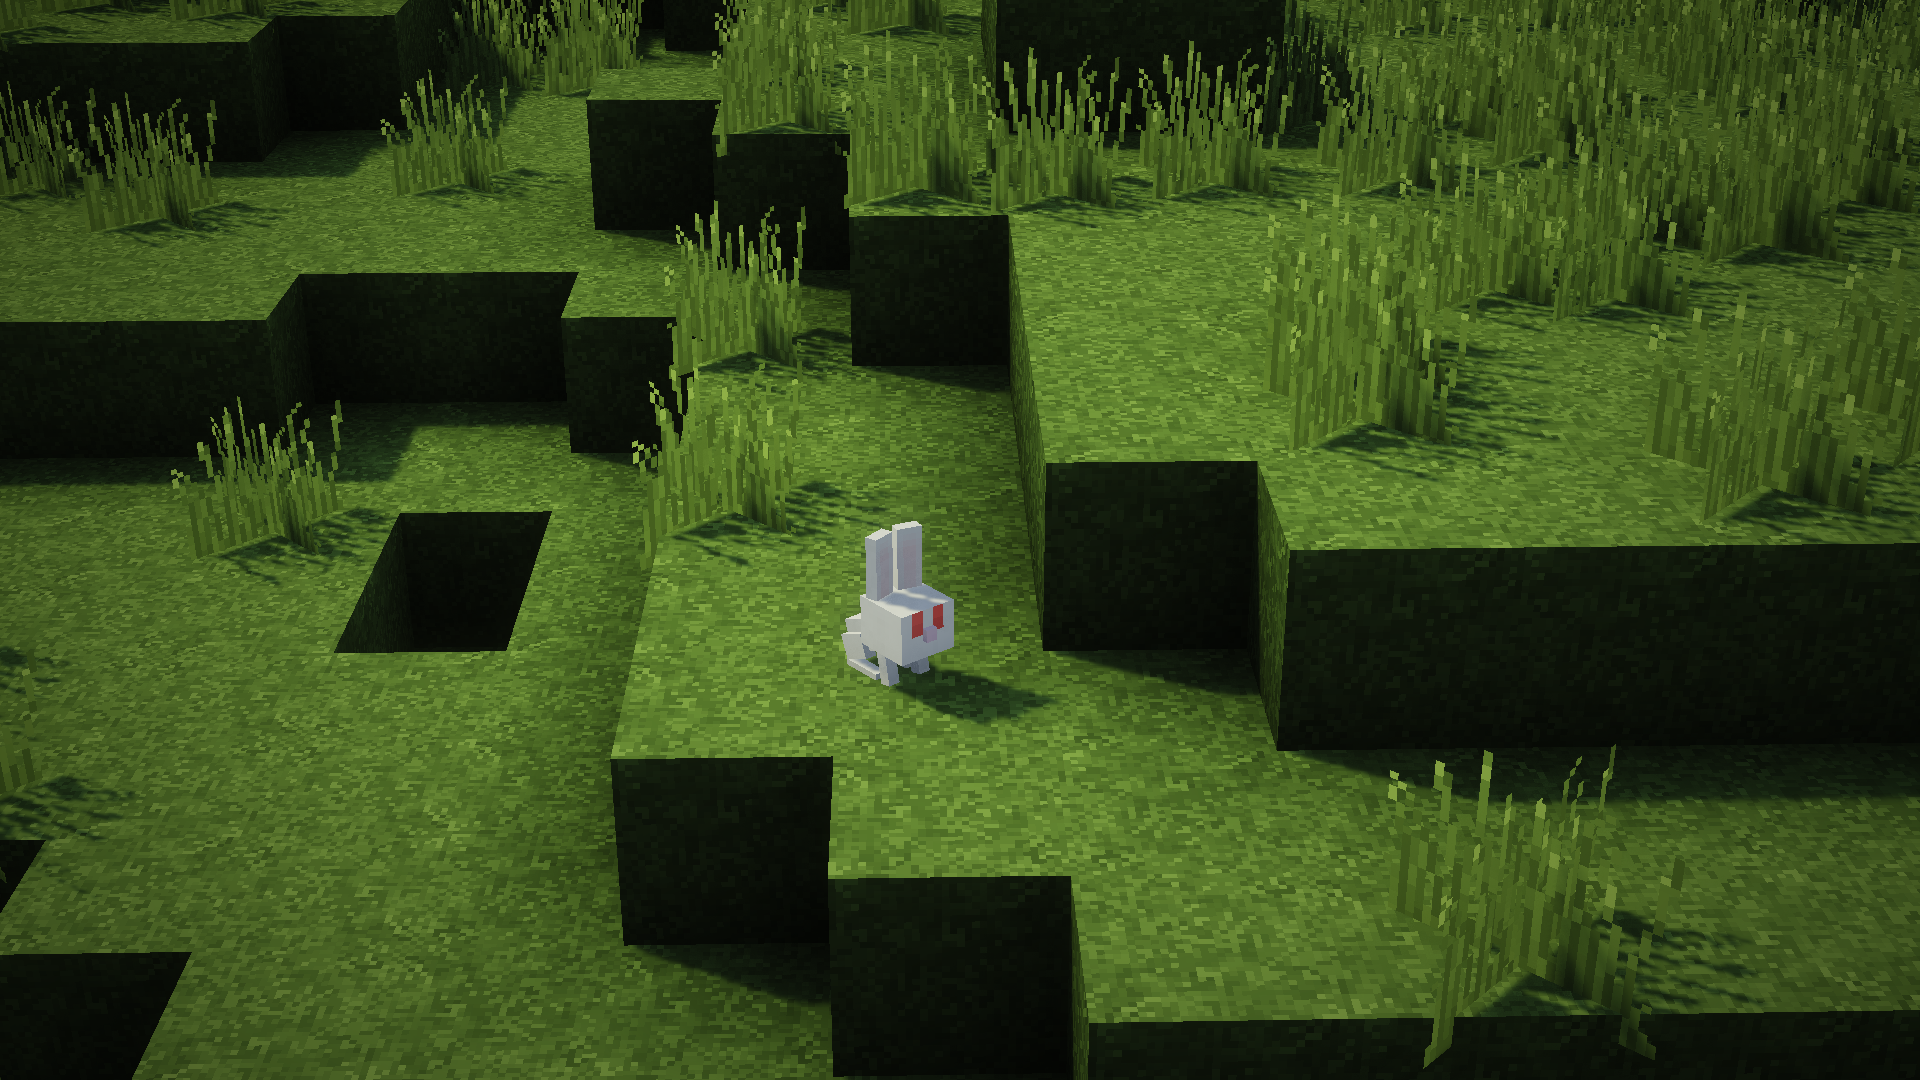 General 1920x1080 PC gaming video games screen shot green Minecraft White Rabbit grass